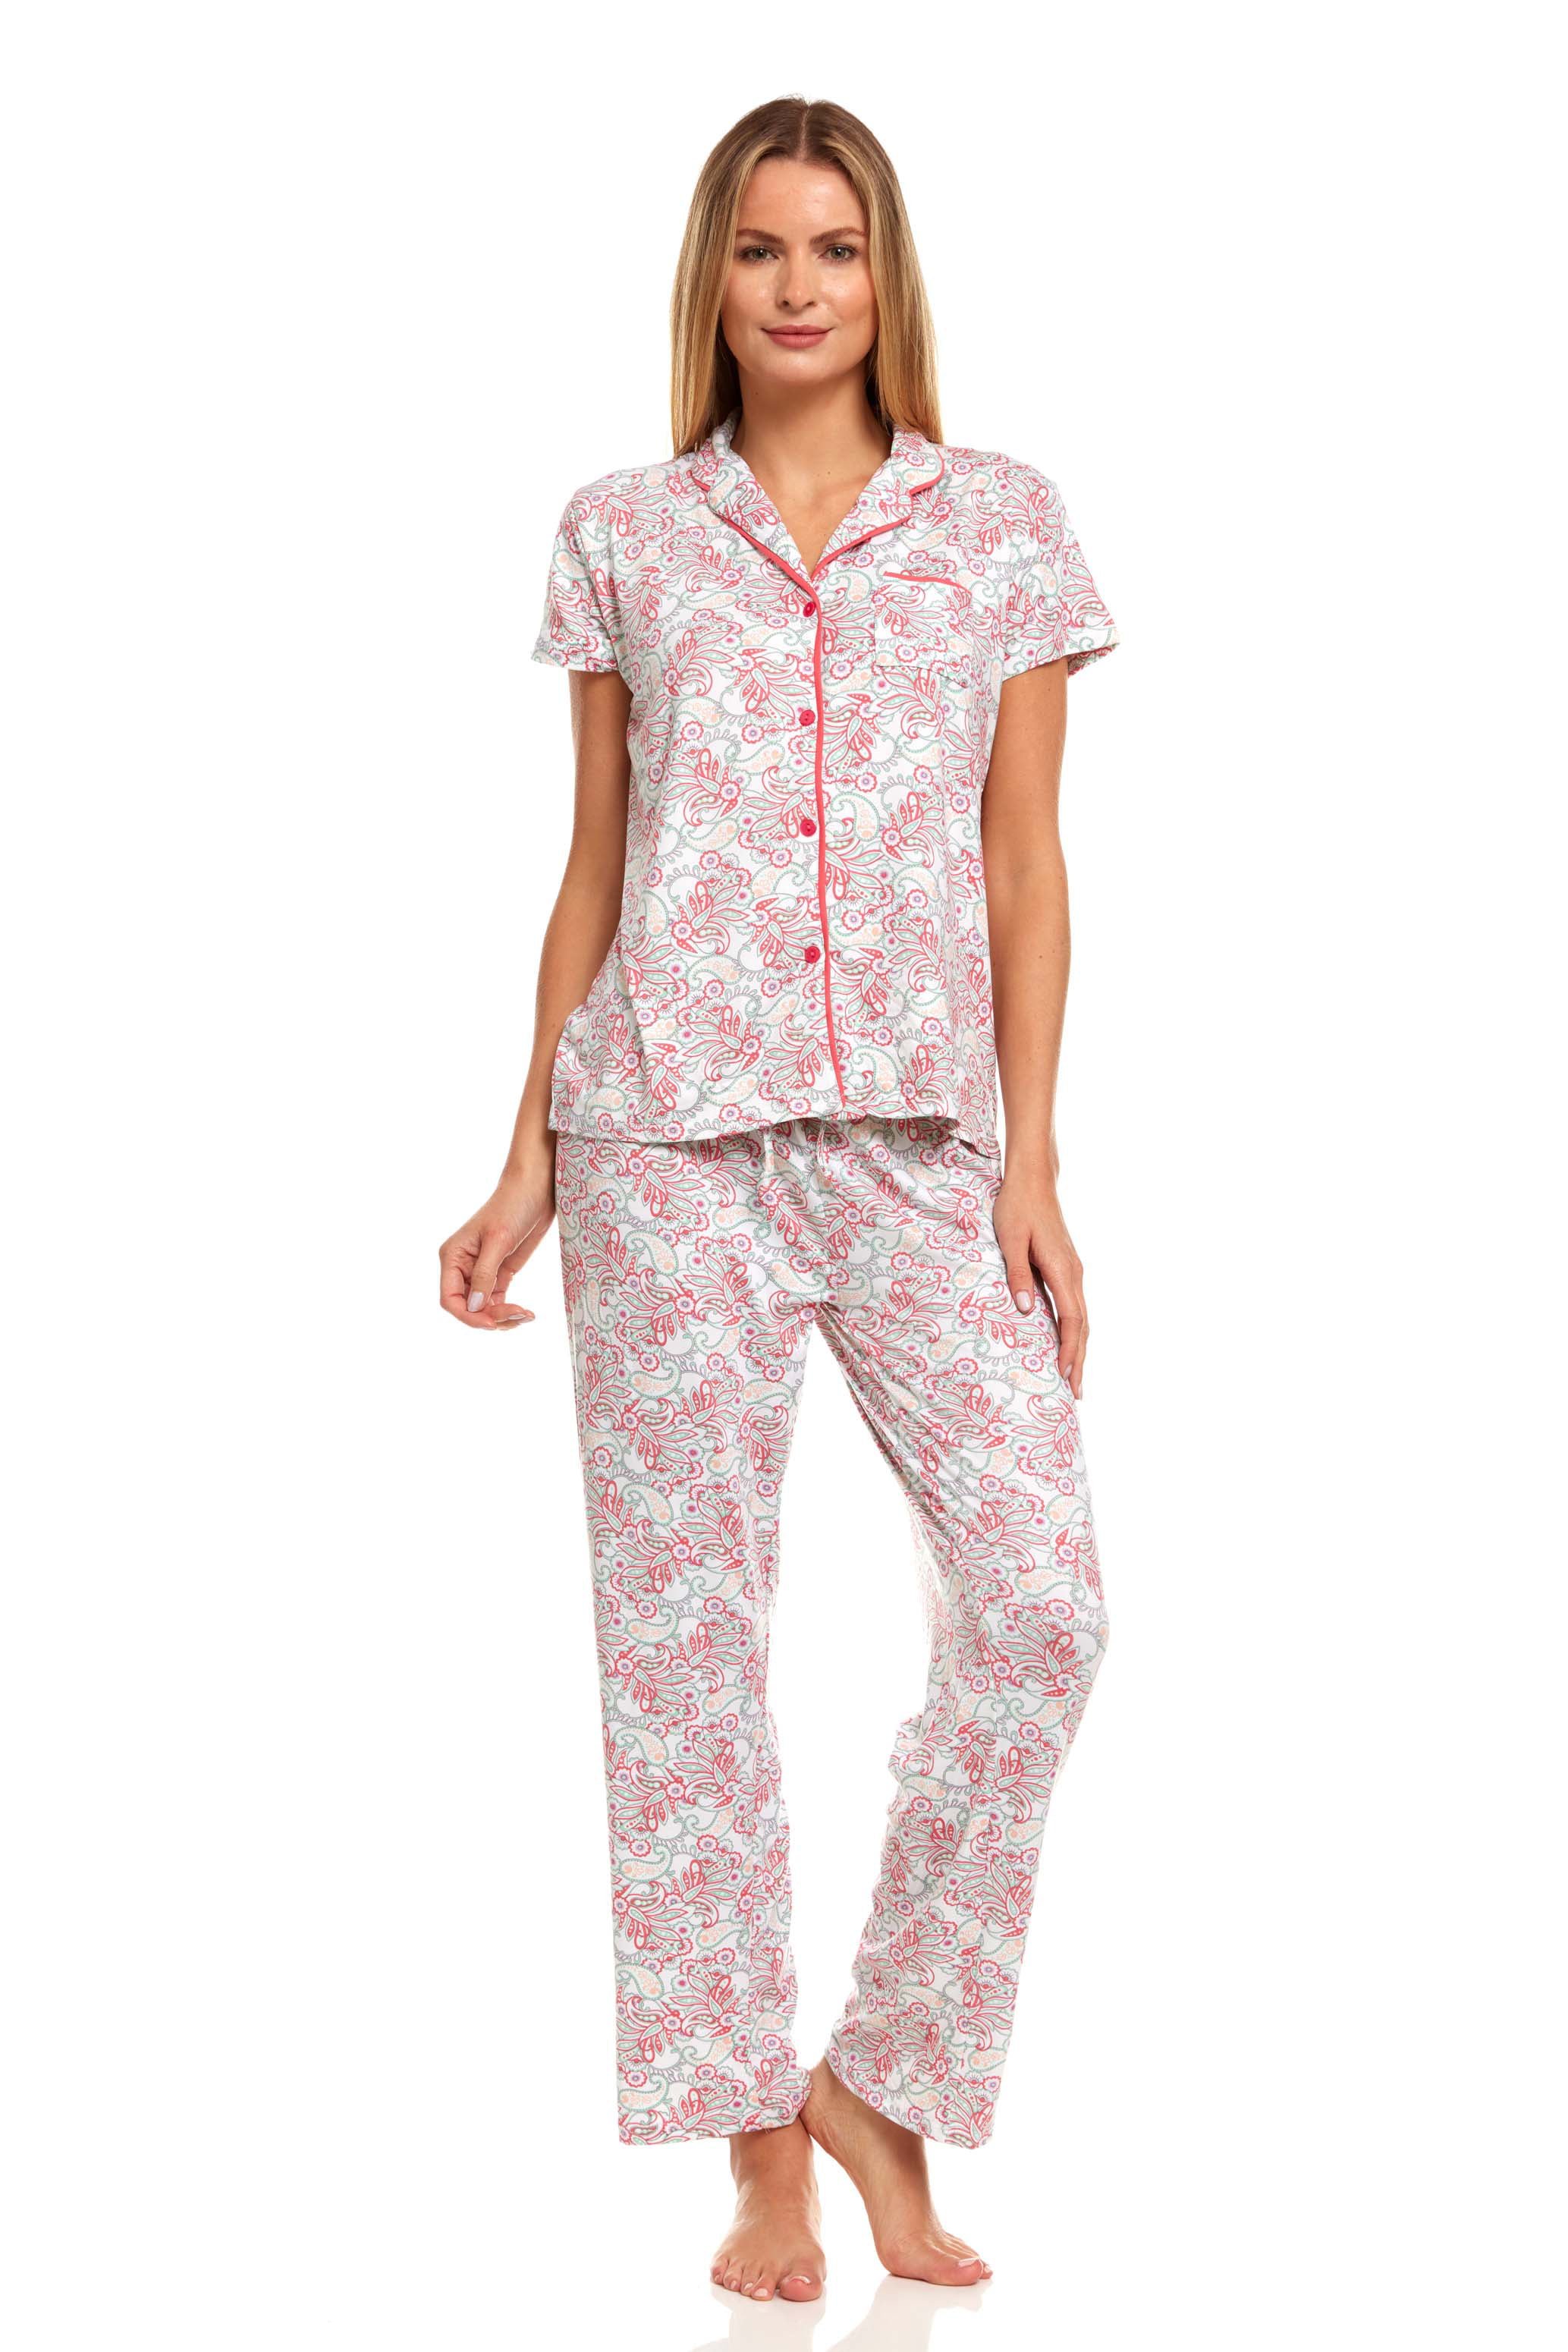 Premiere Fashion Womens Sleepwear Pajamas Set Woman Short Sleeve Button Down Set